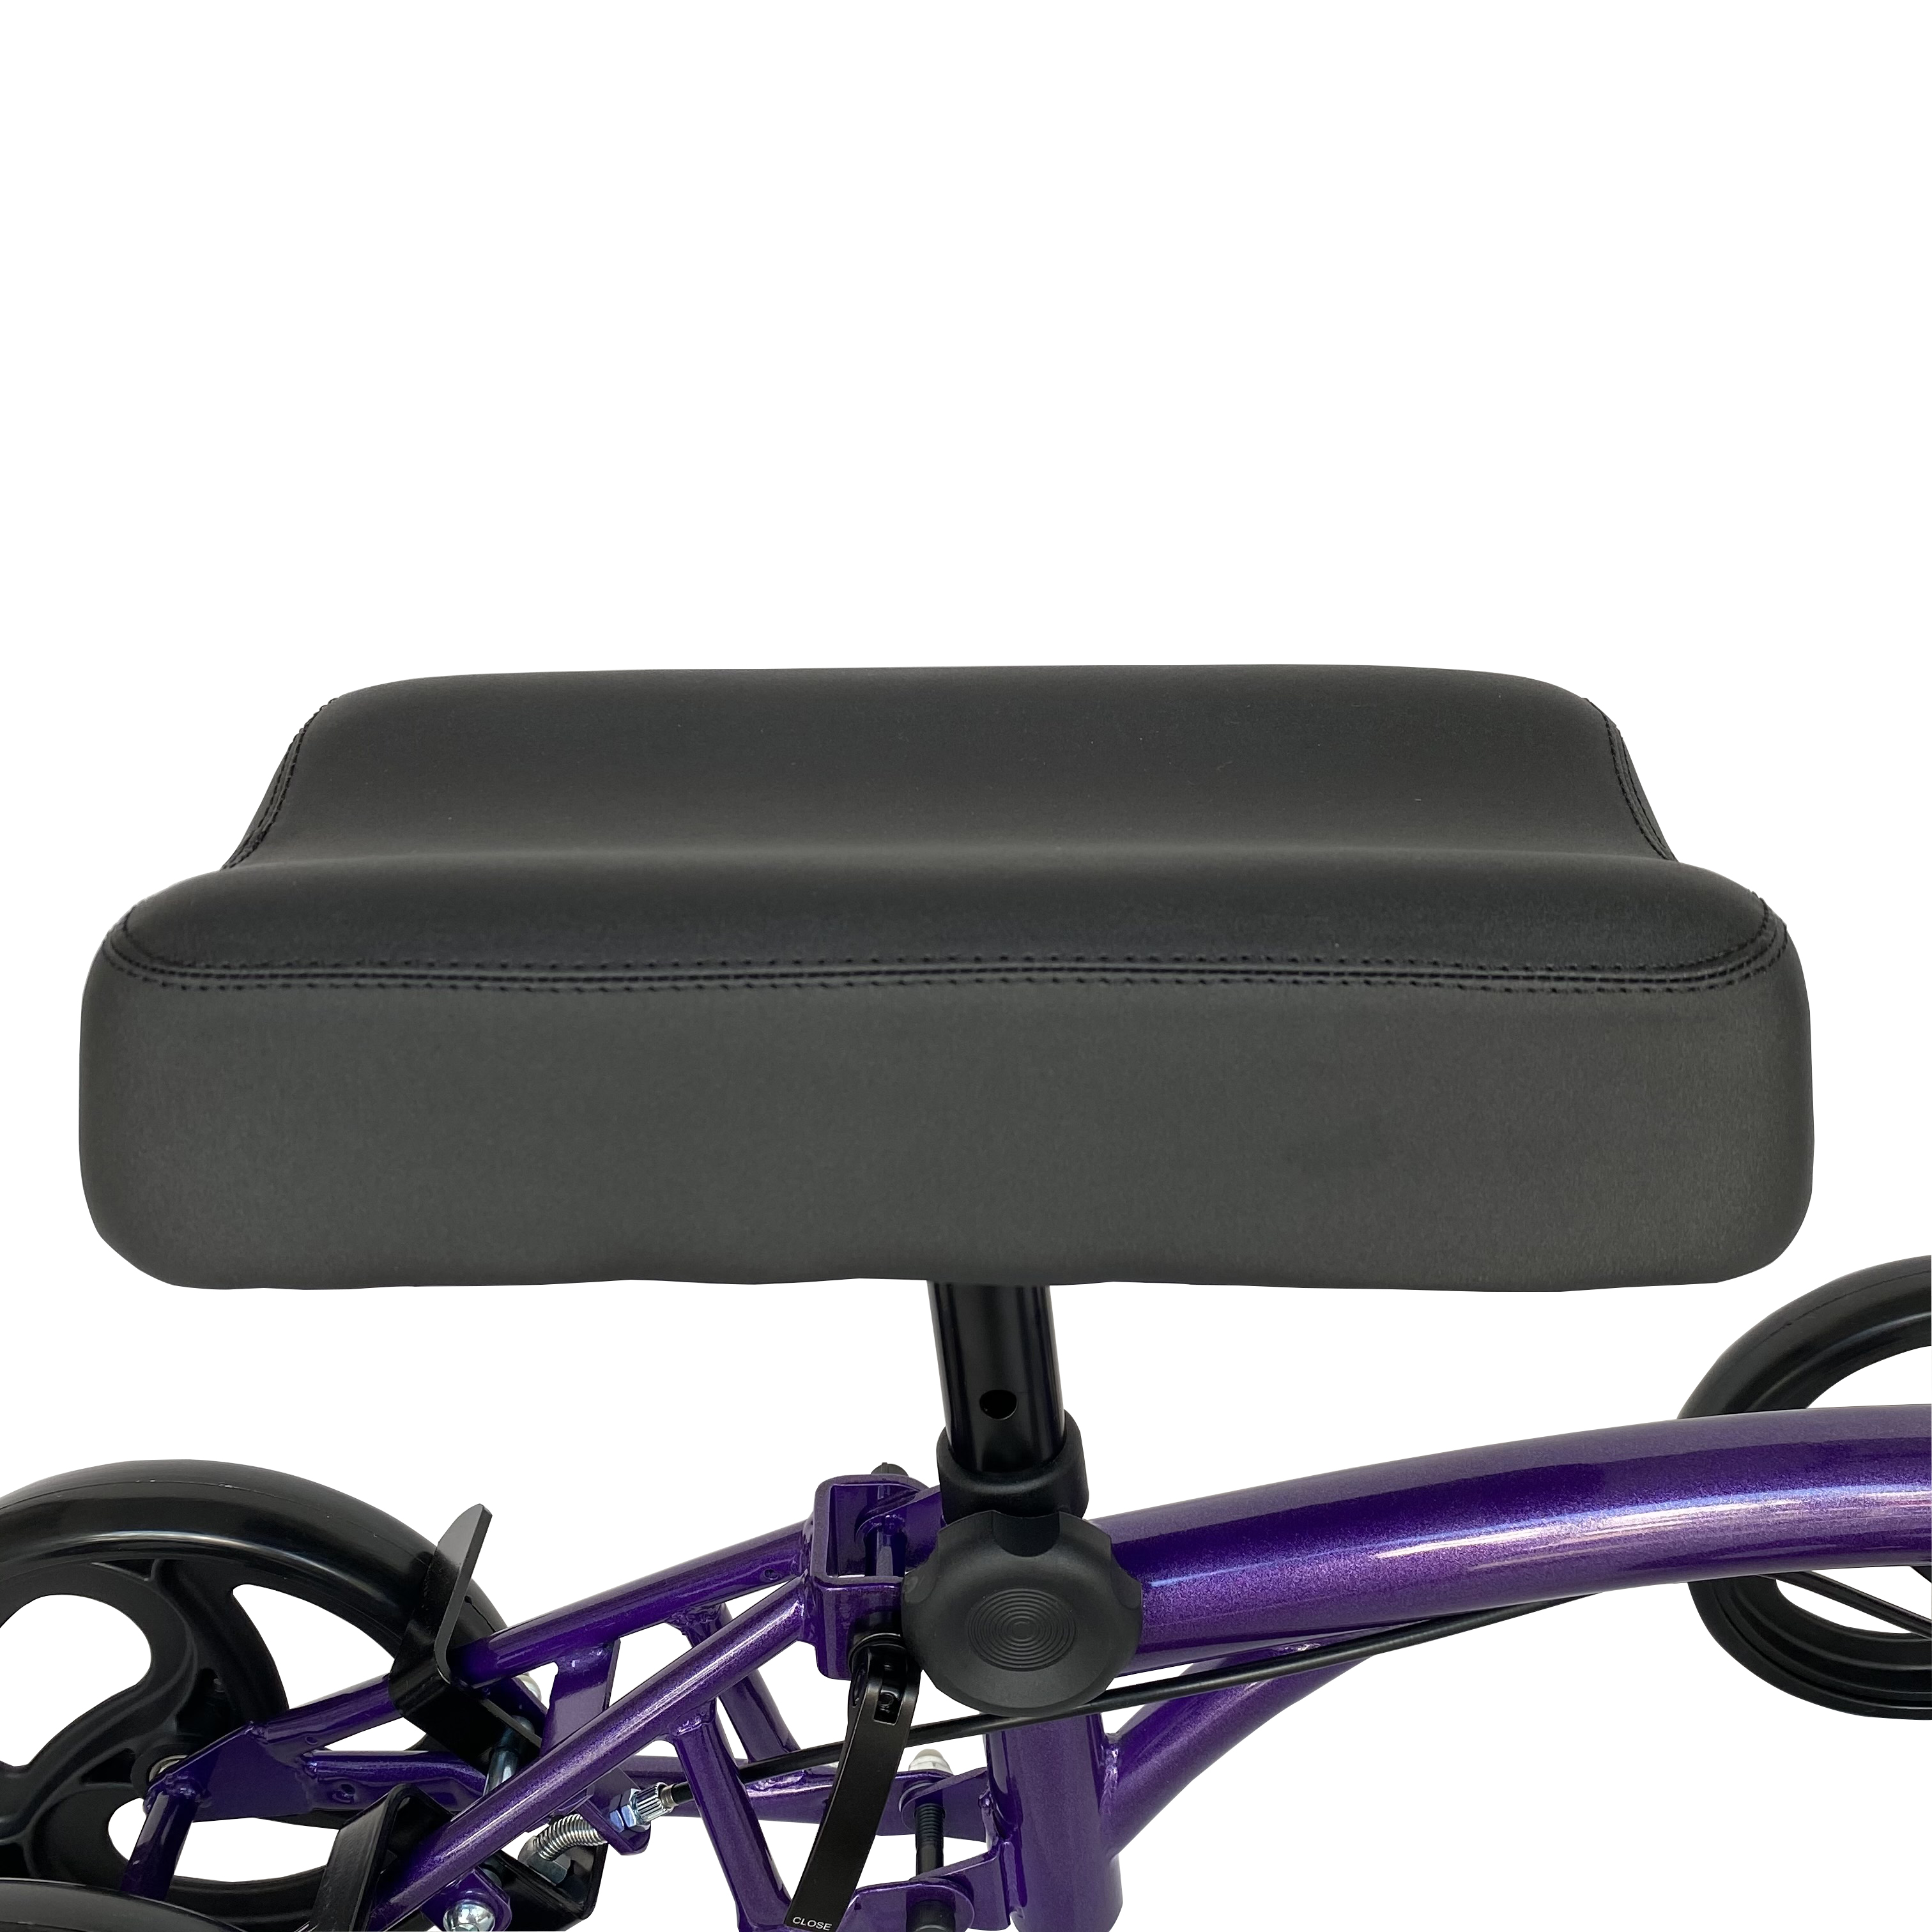 Steel Outdoor Medical Adjustable Steerable Knee Rollator Walker Scooter for Disabled